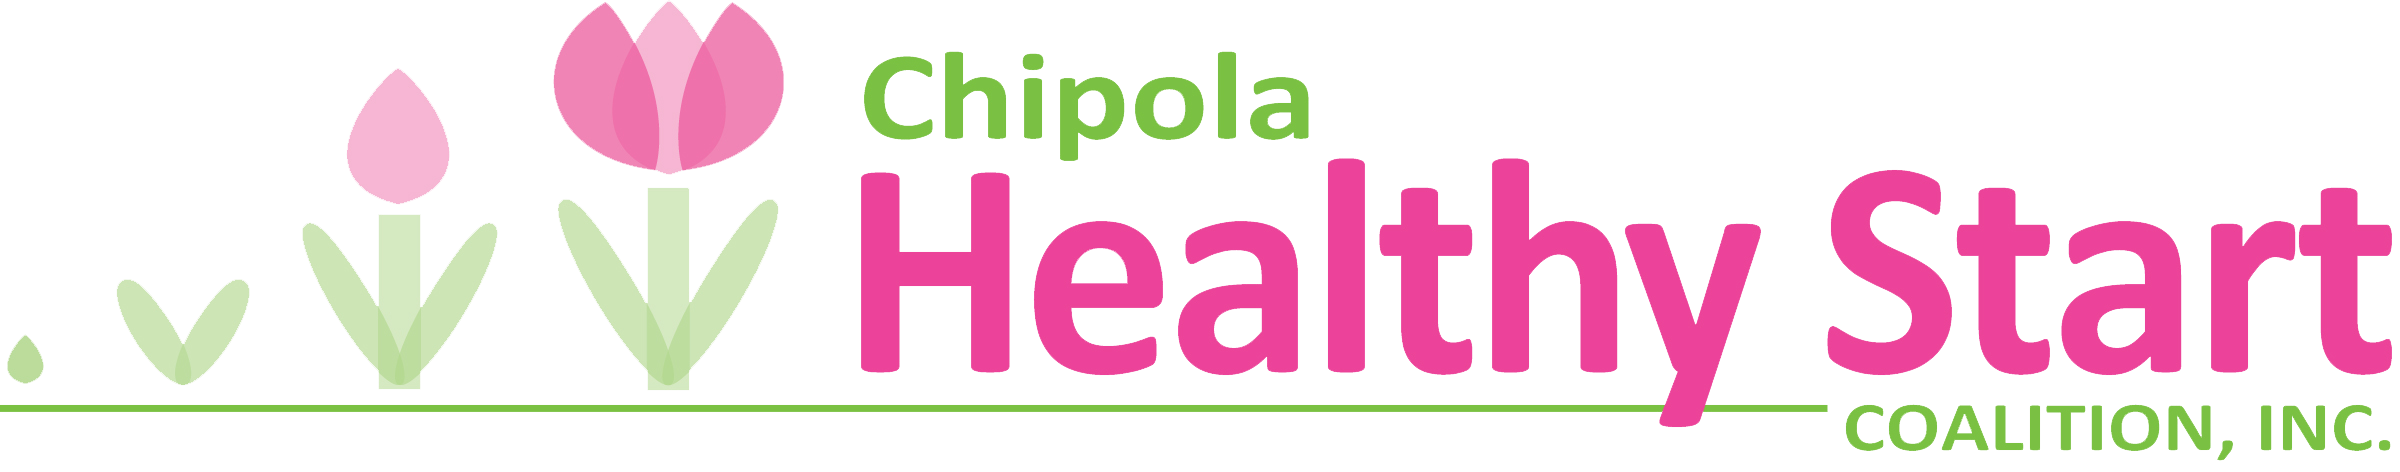 Chipola Healthy Start Coalition, Inc.